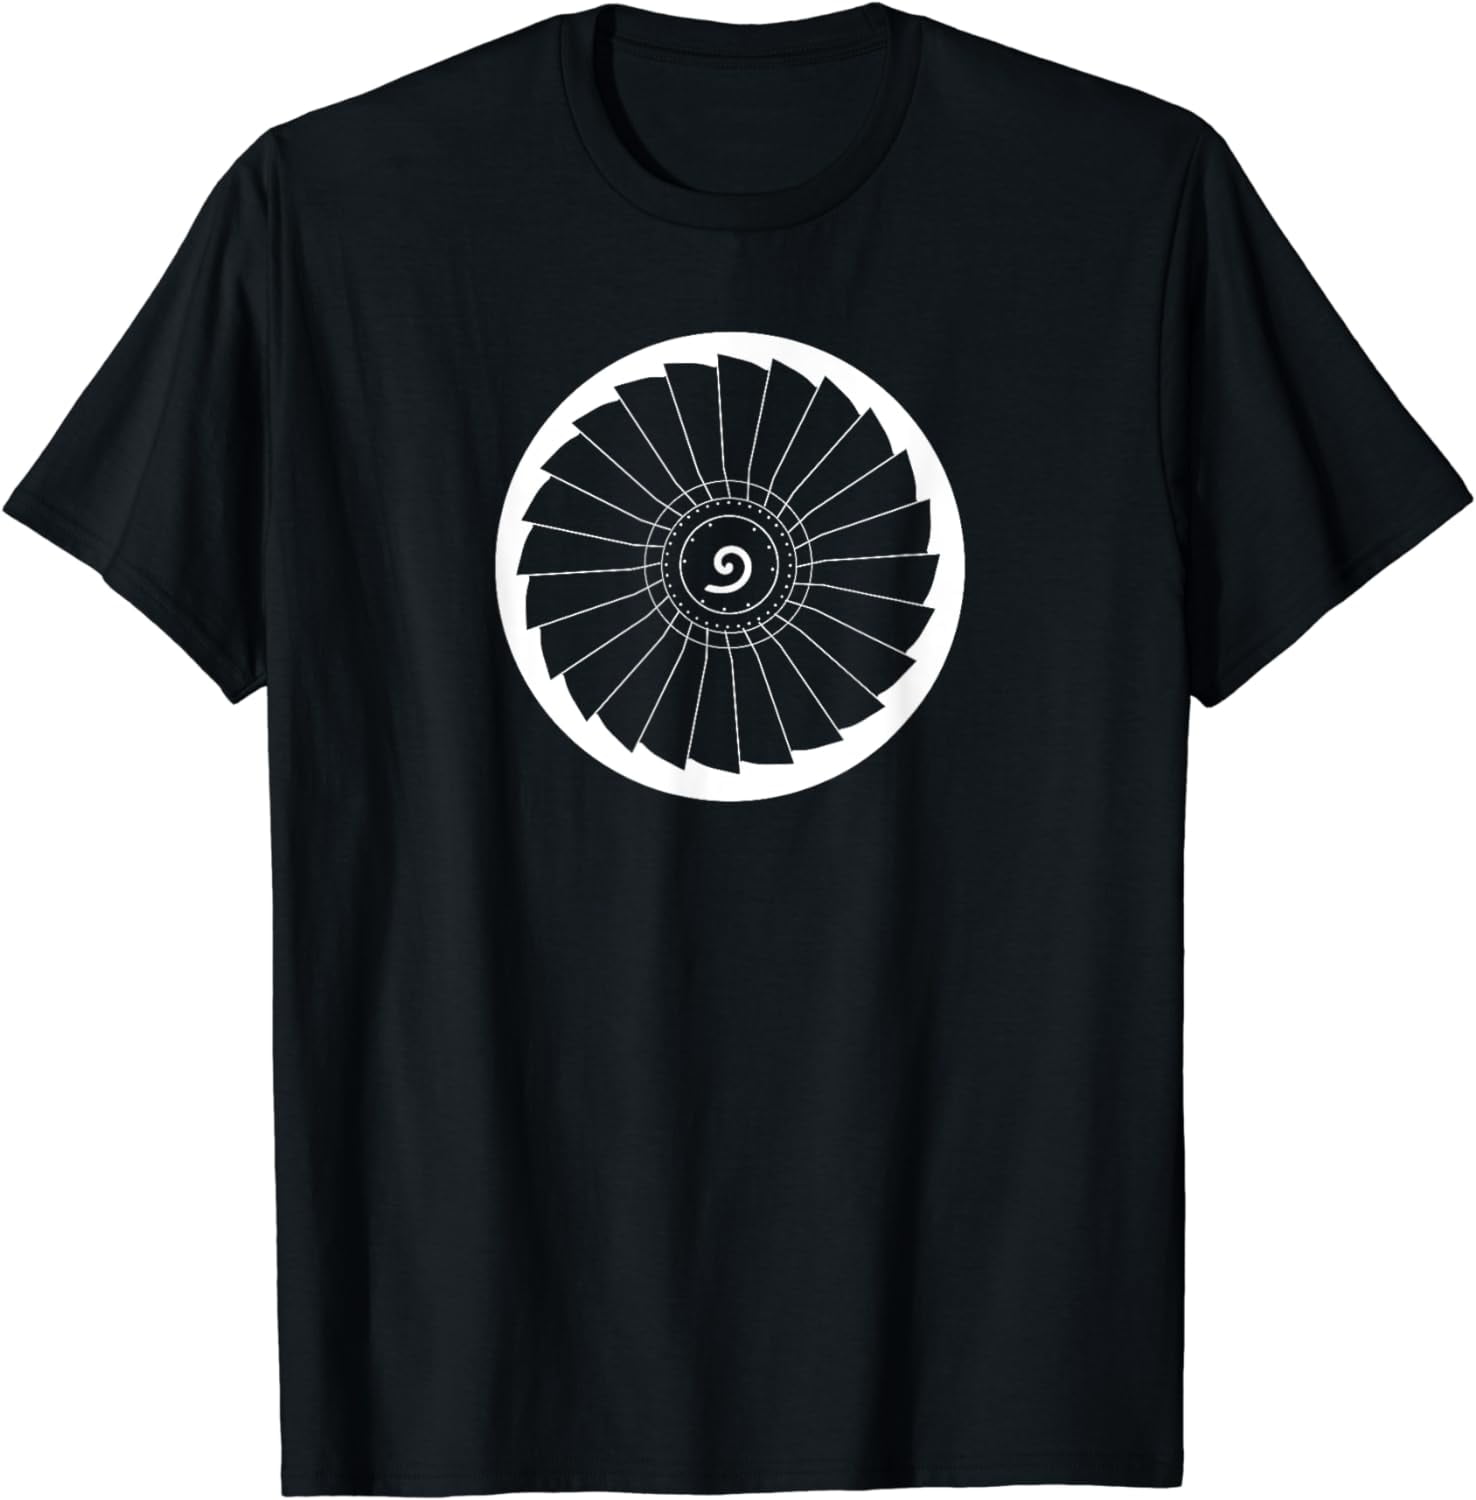 737 Turbine Commercial Airliner Pilot T-shirt - Walmart.com